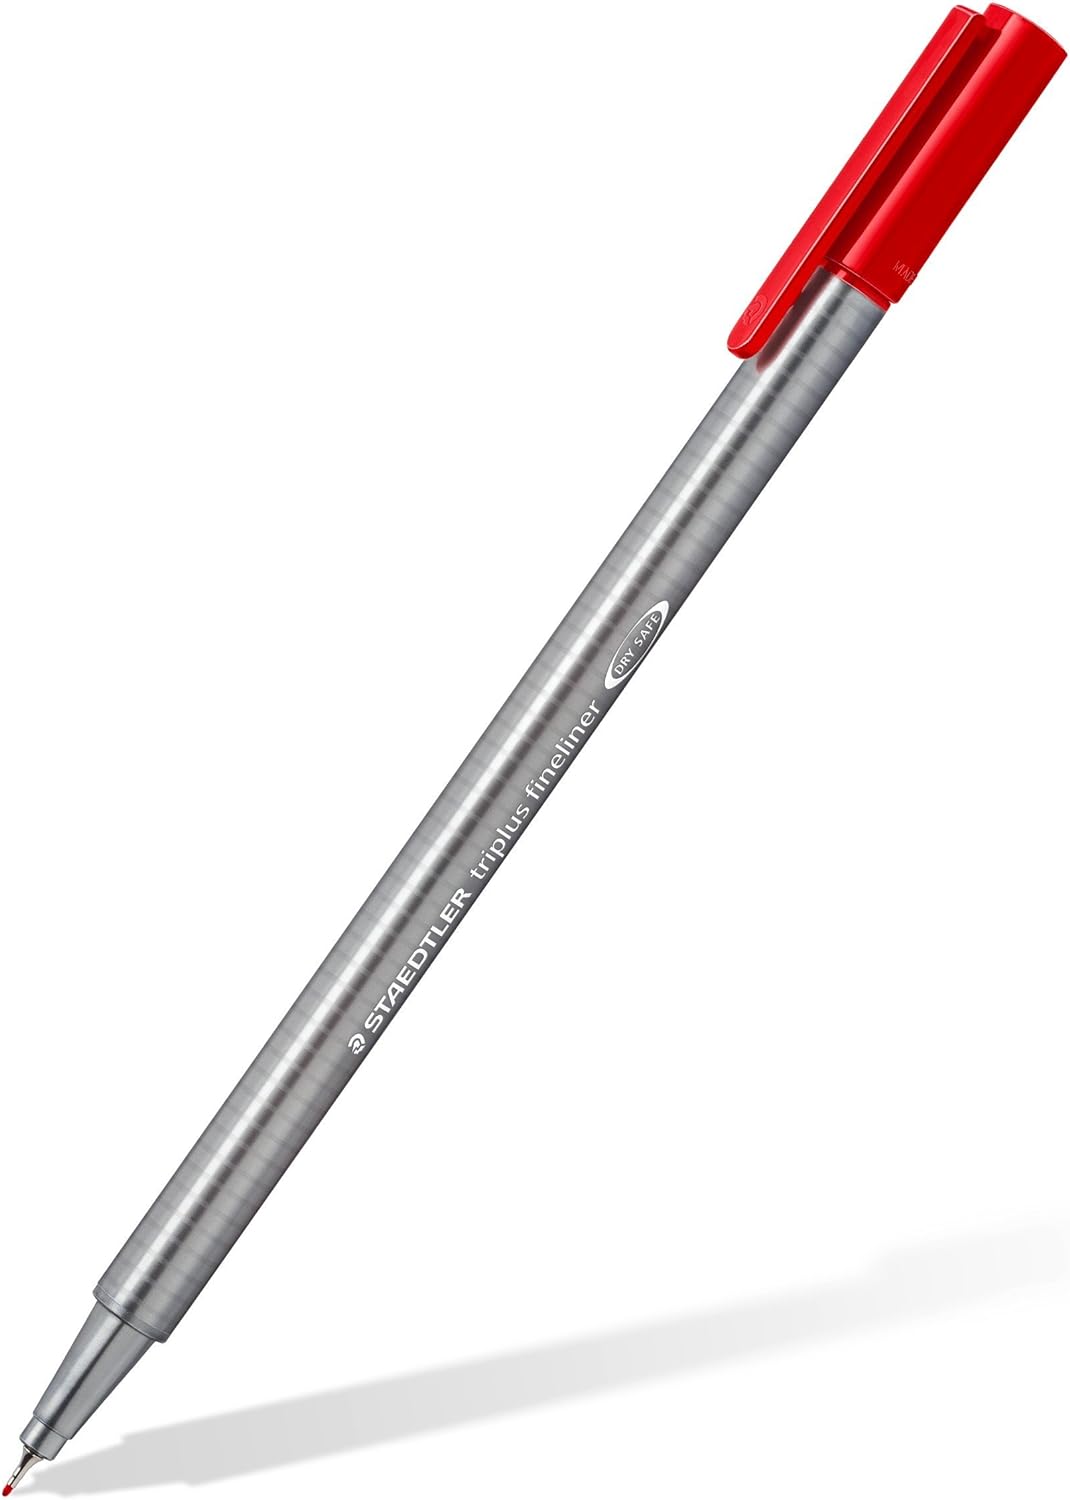 STAEDTLER Triplus Fineliner Pen,20 Assorted Colours